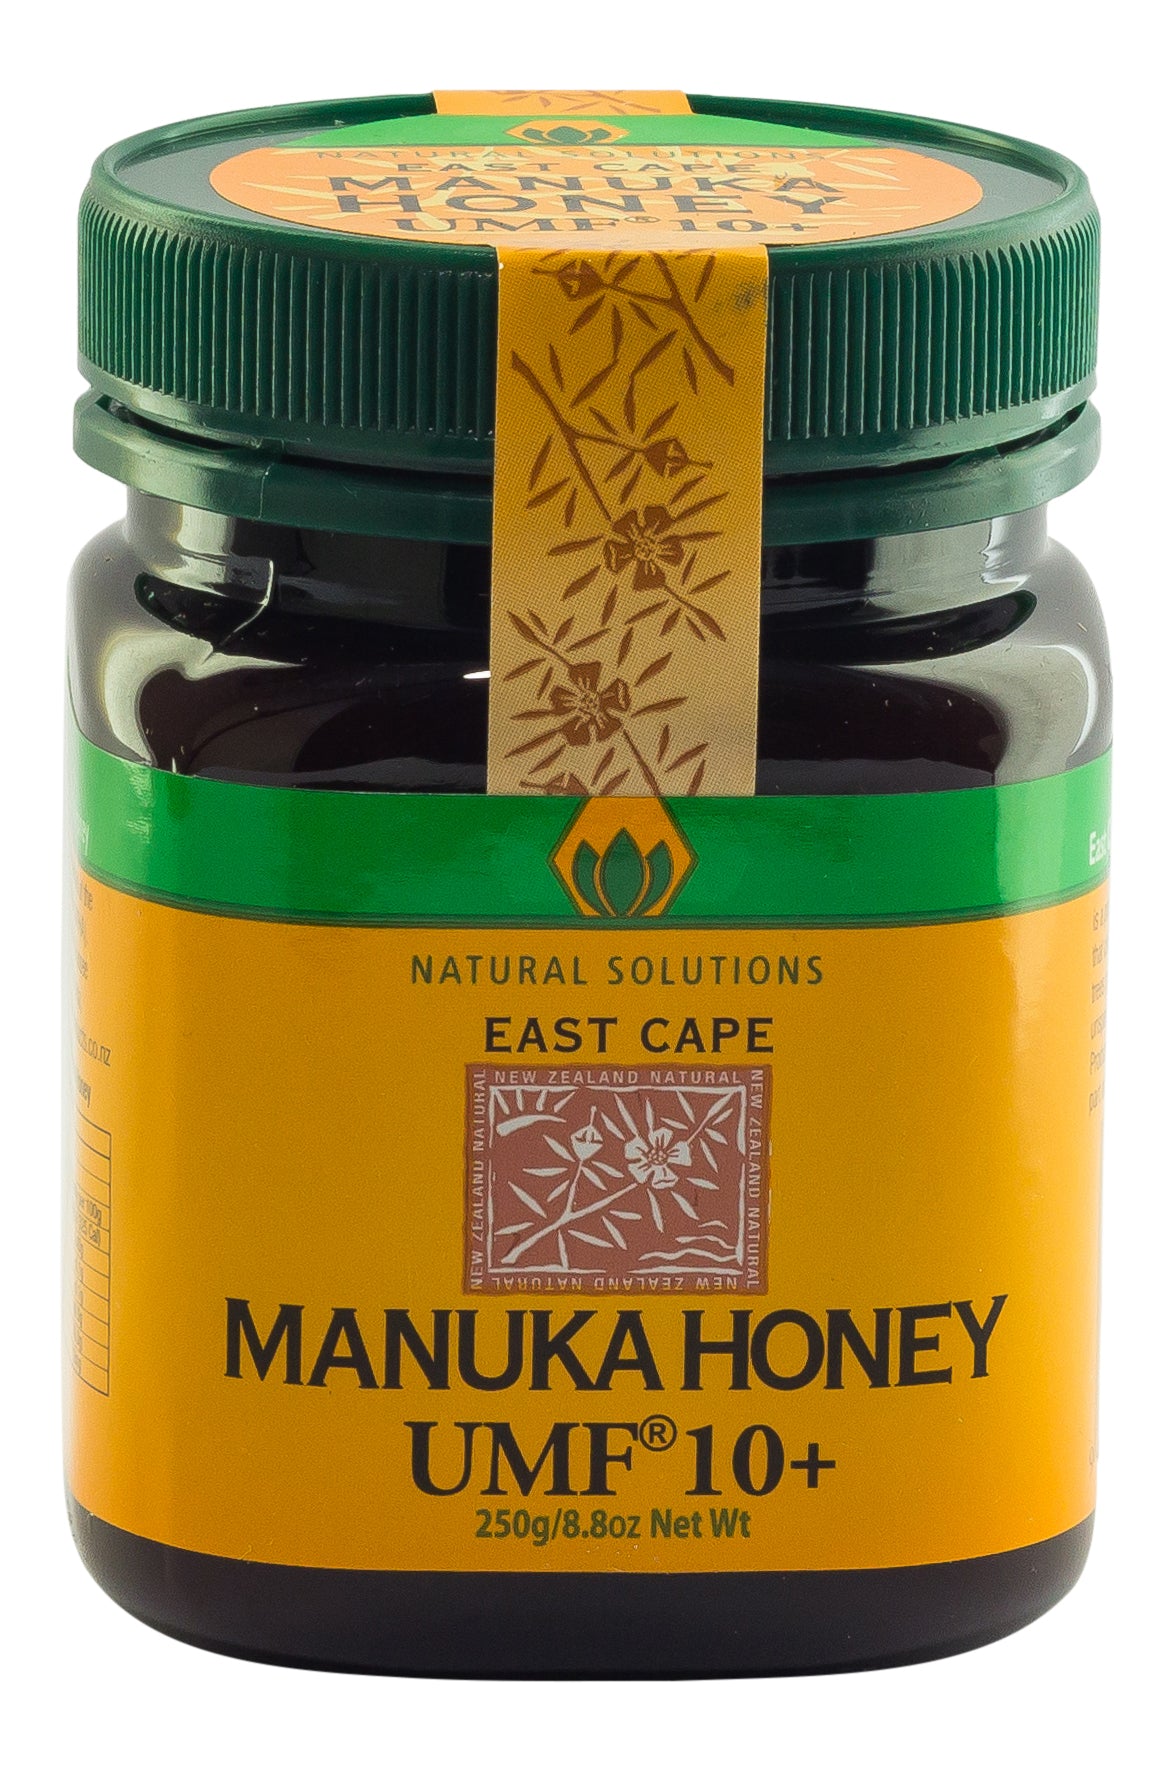 Manuka honey is heat sensitive so keep it cool.